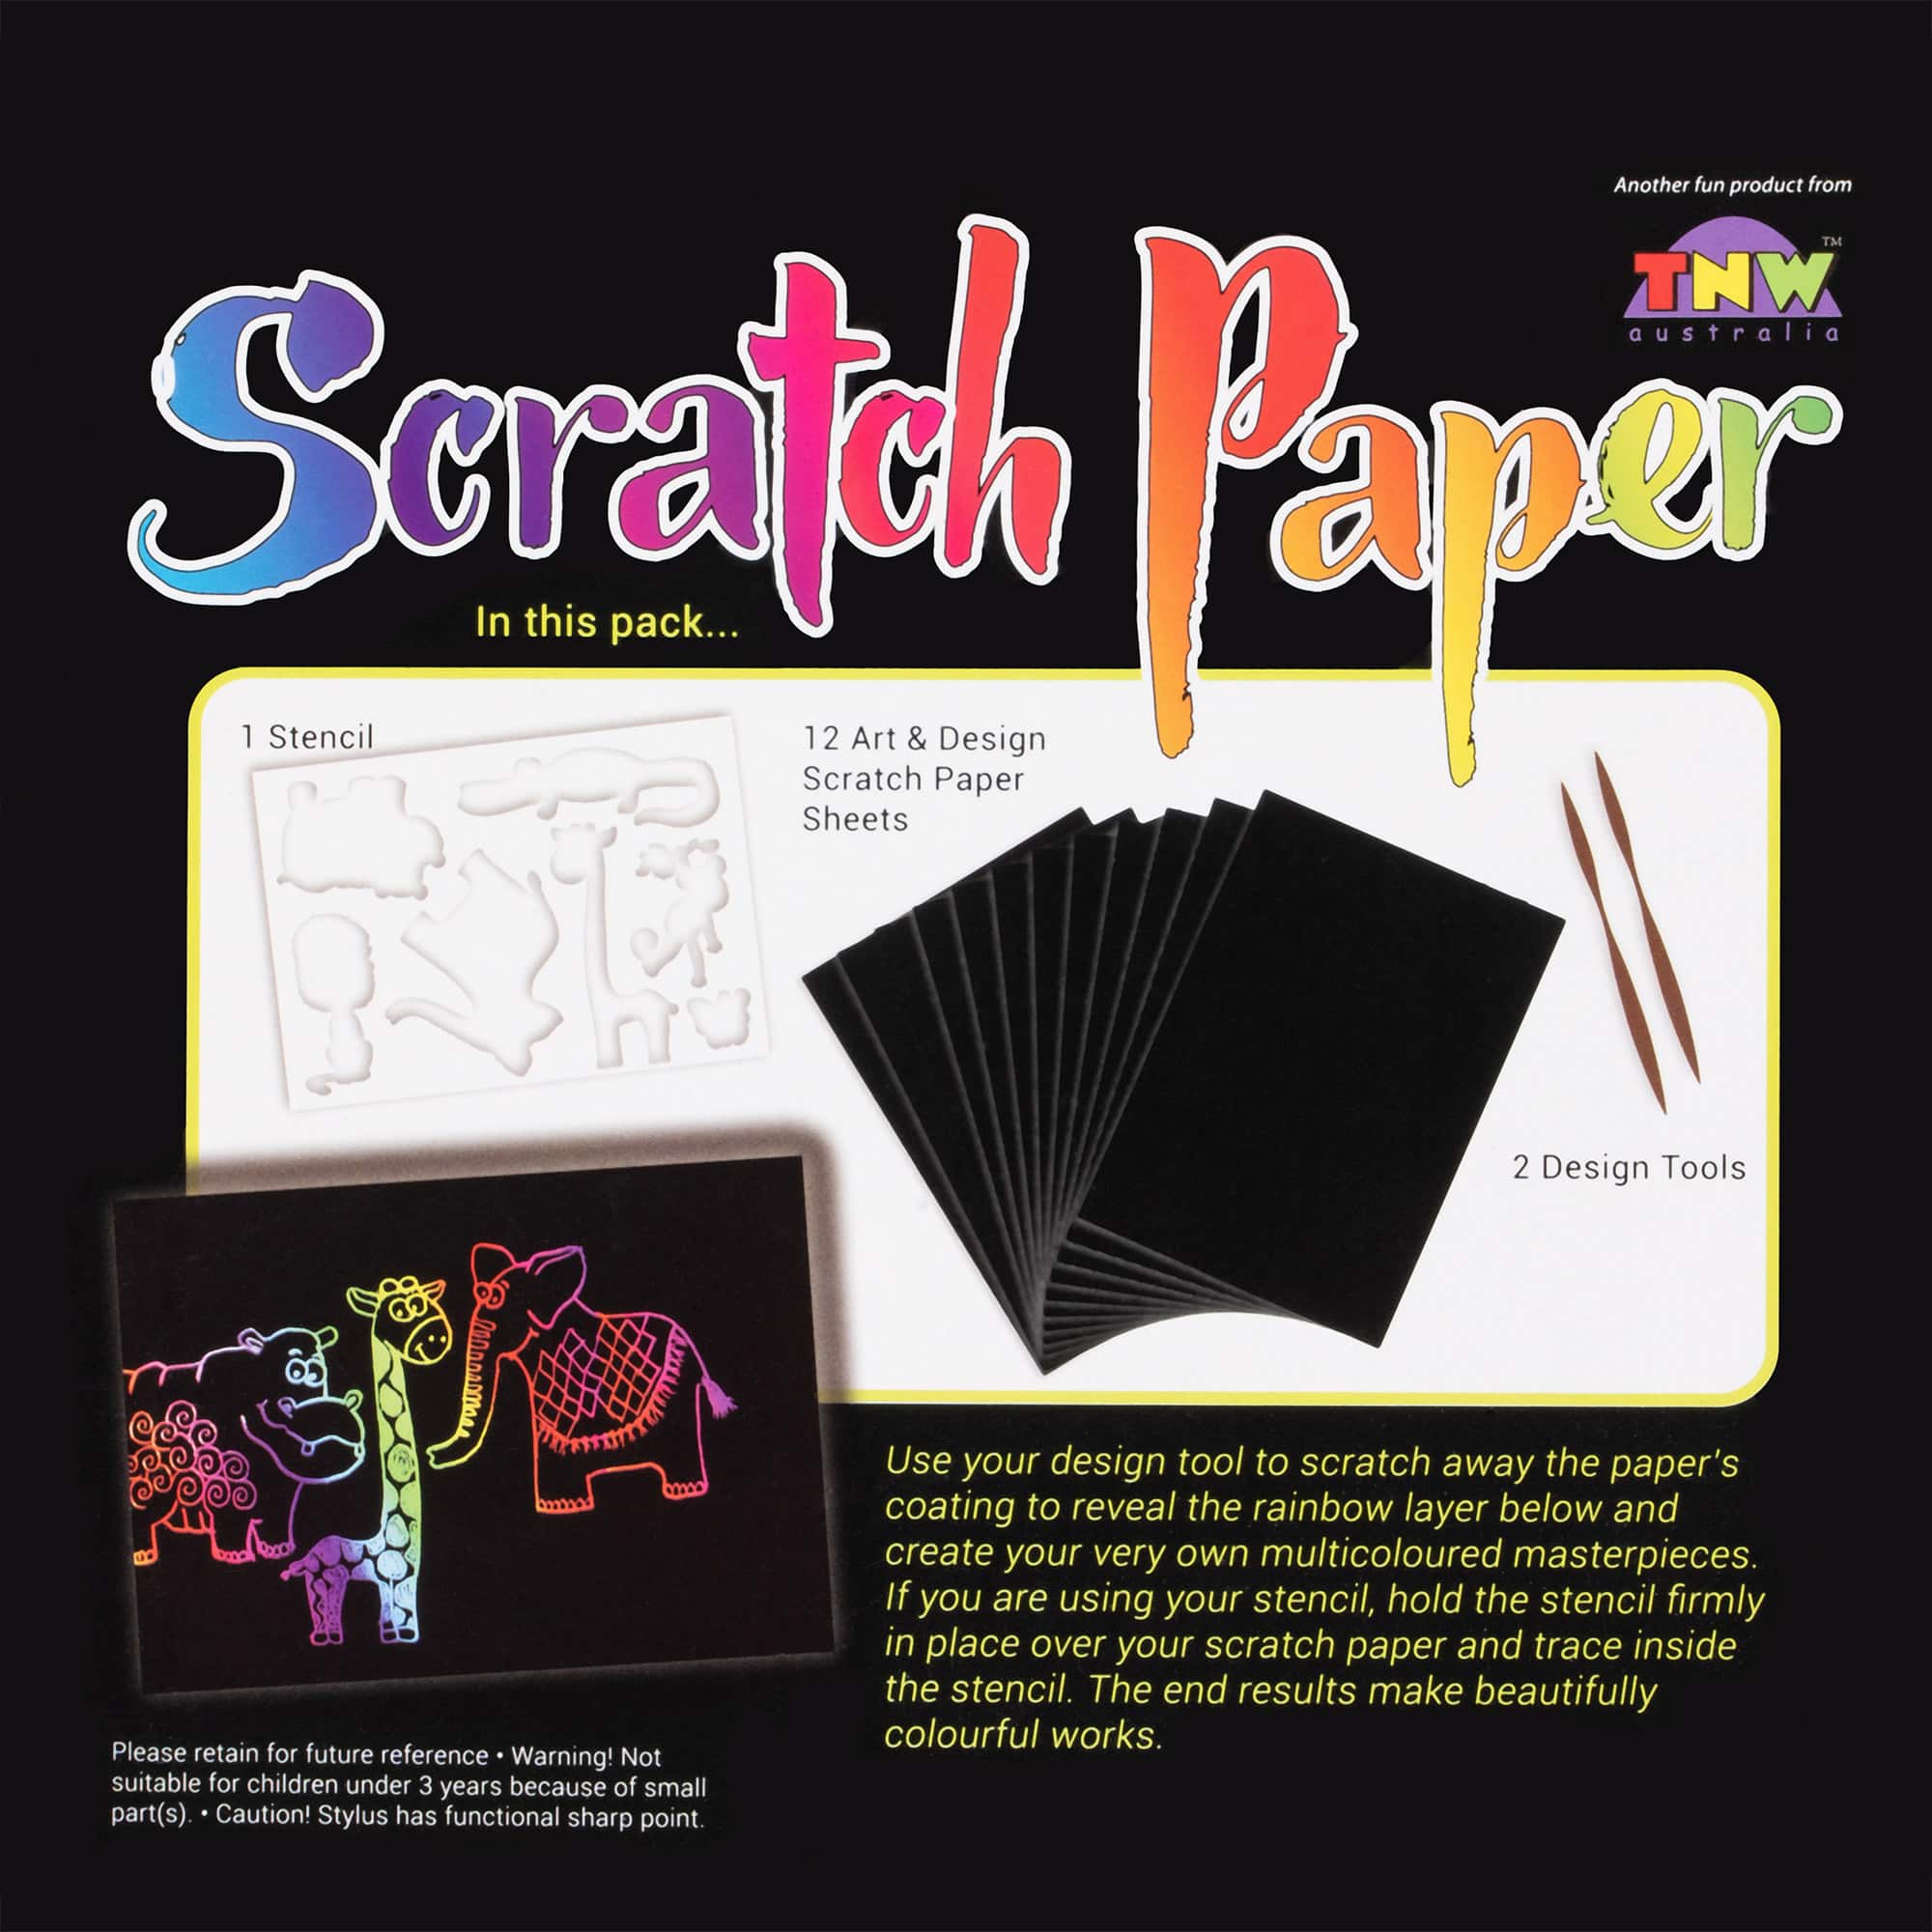 Art & Design Scratch Paper - 12 A5 Sheets